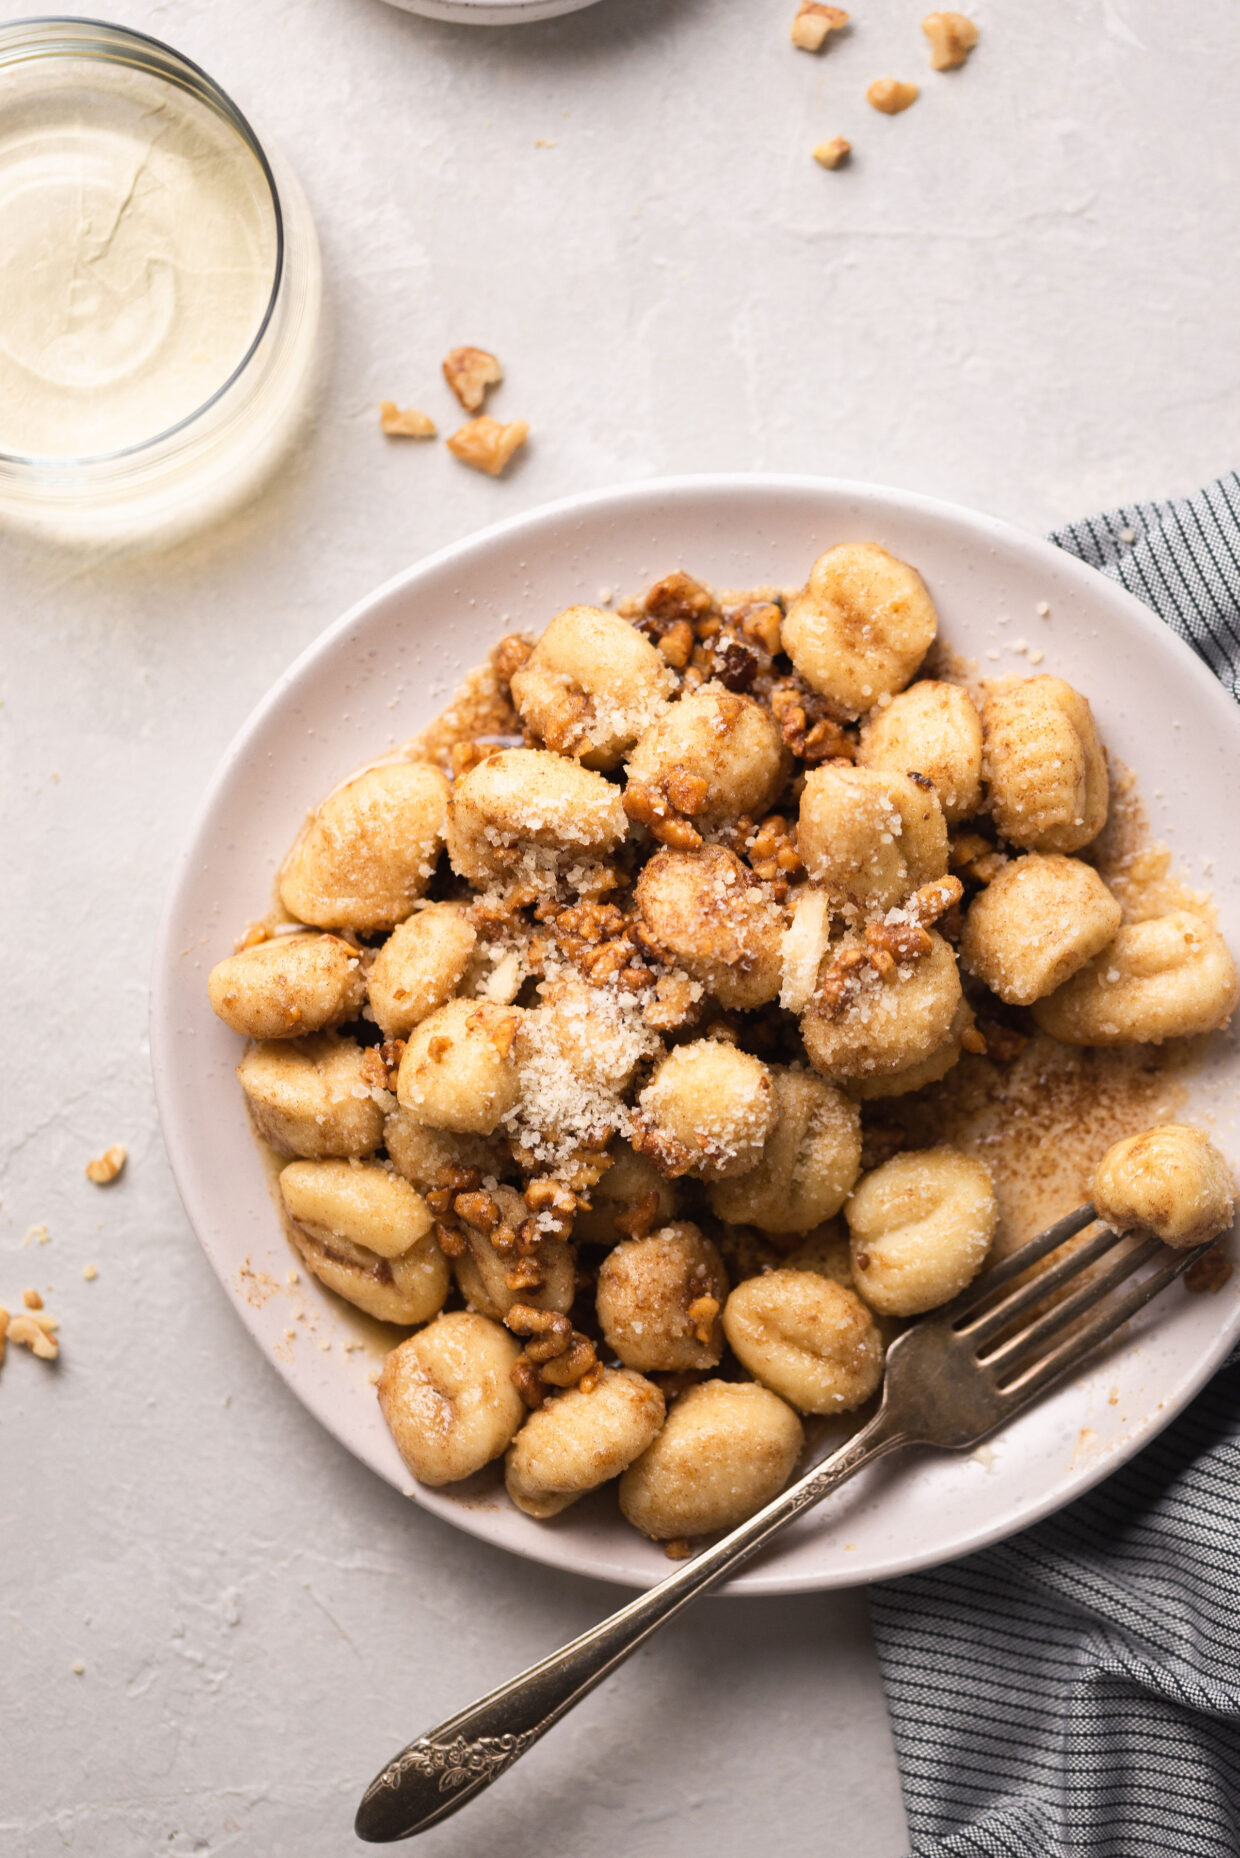 Classic Potato Gnocchi with Brown Butter, Parmigiano Reggiano and Walnuts